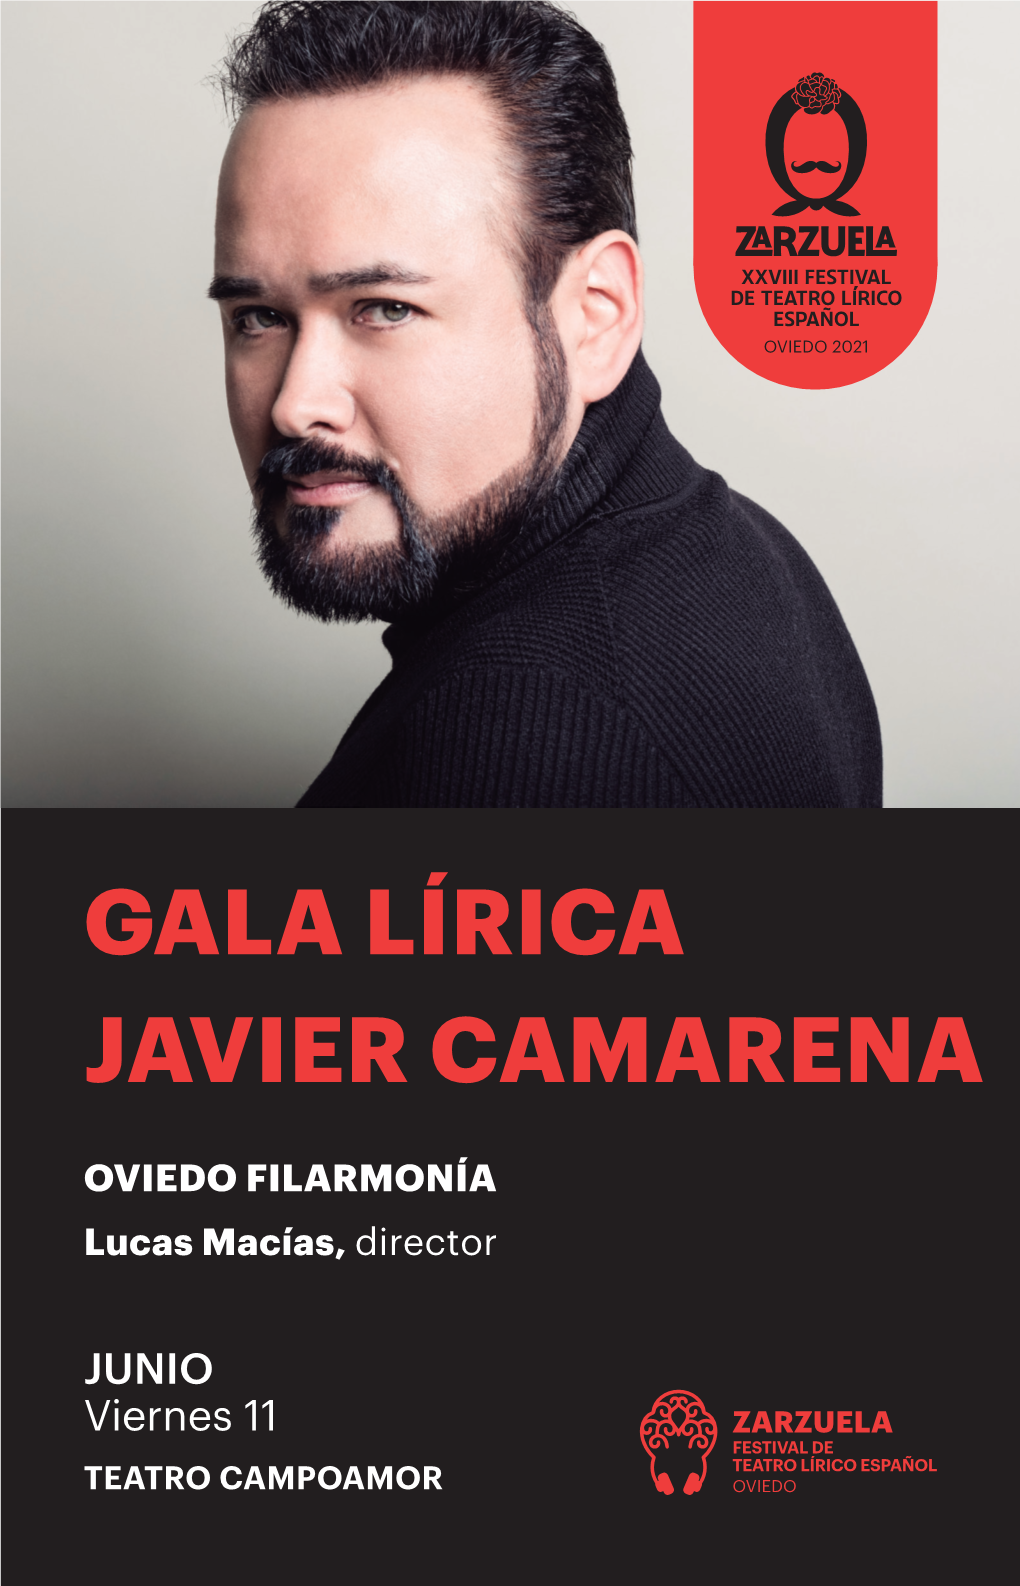 Gala Lírica Javier Camarena